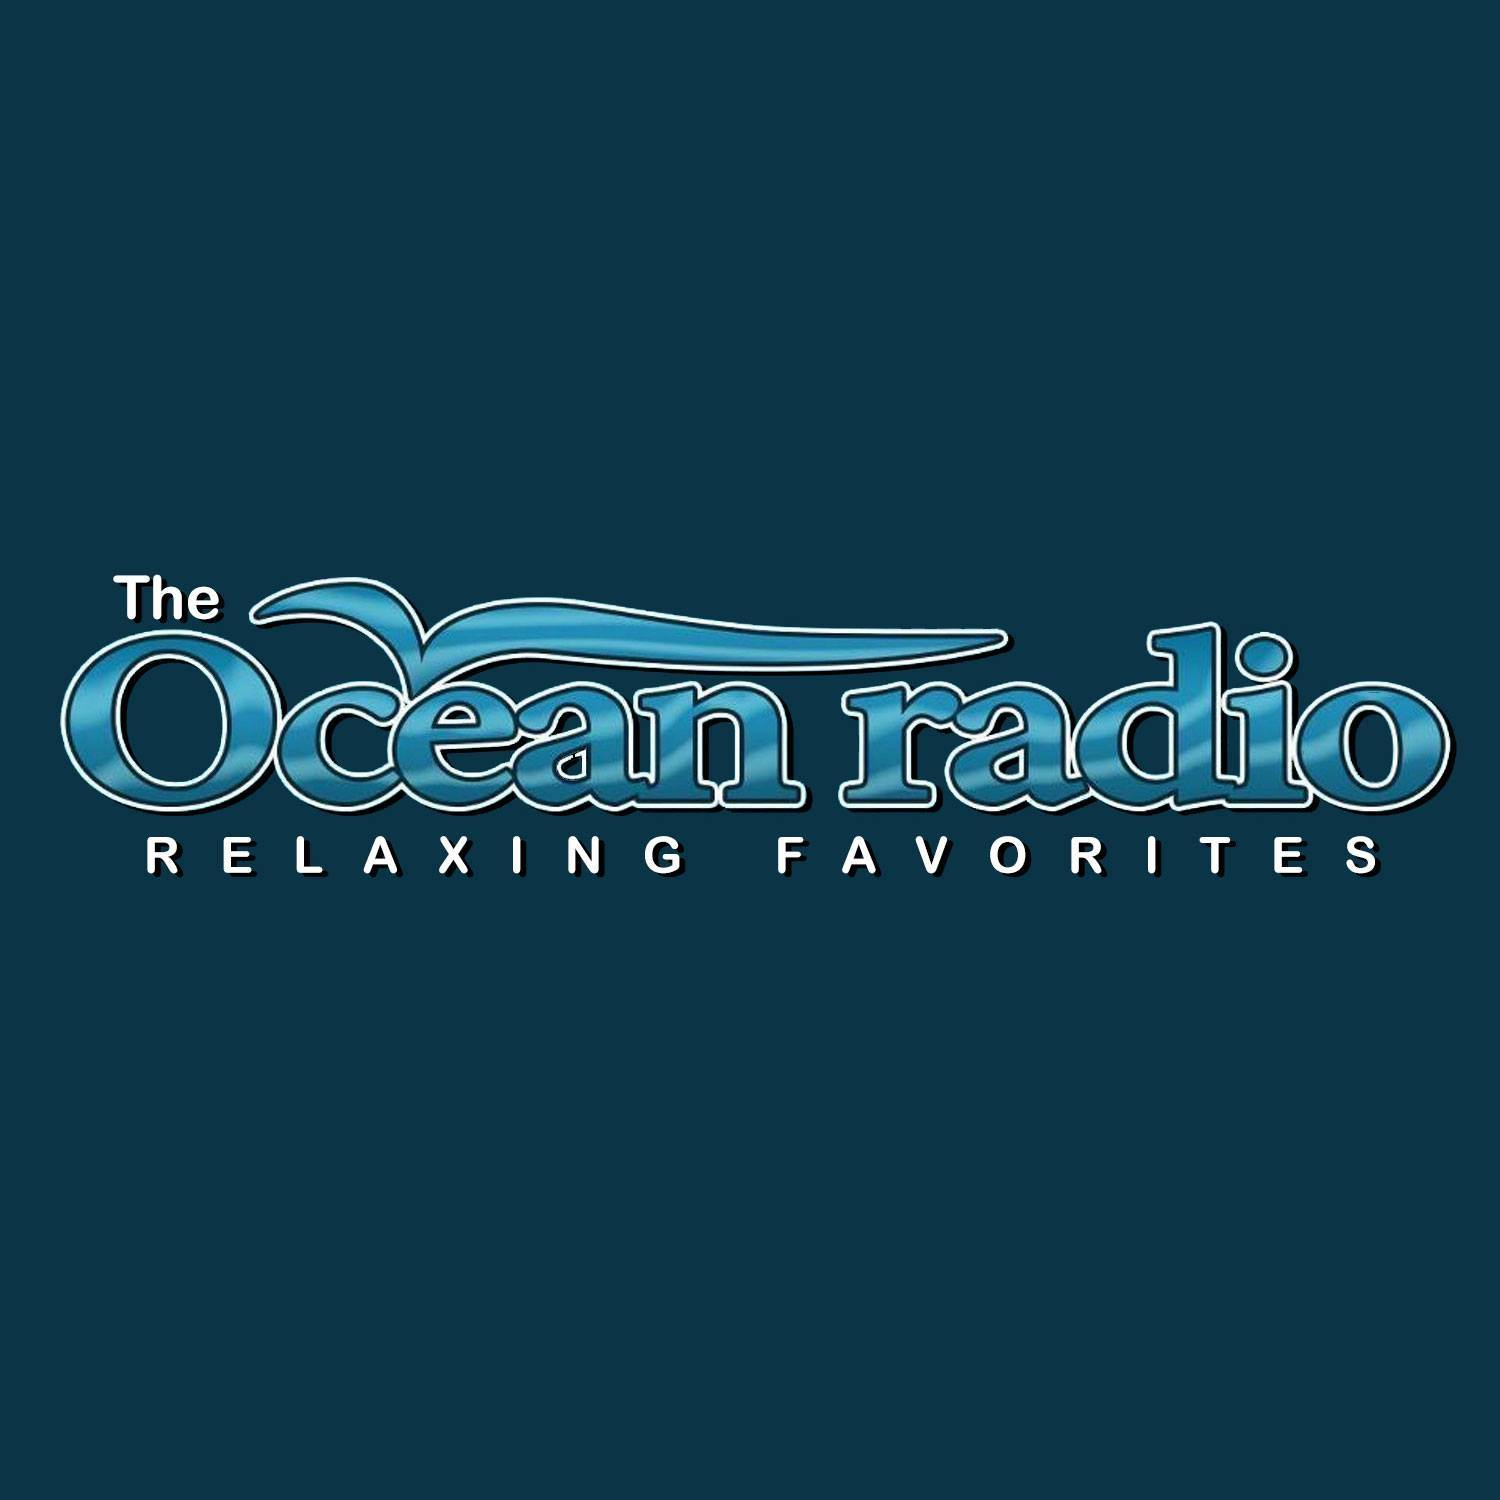 The Ocean Radio